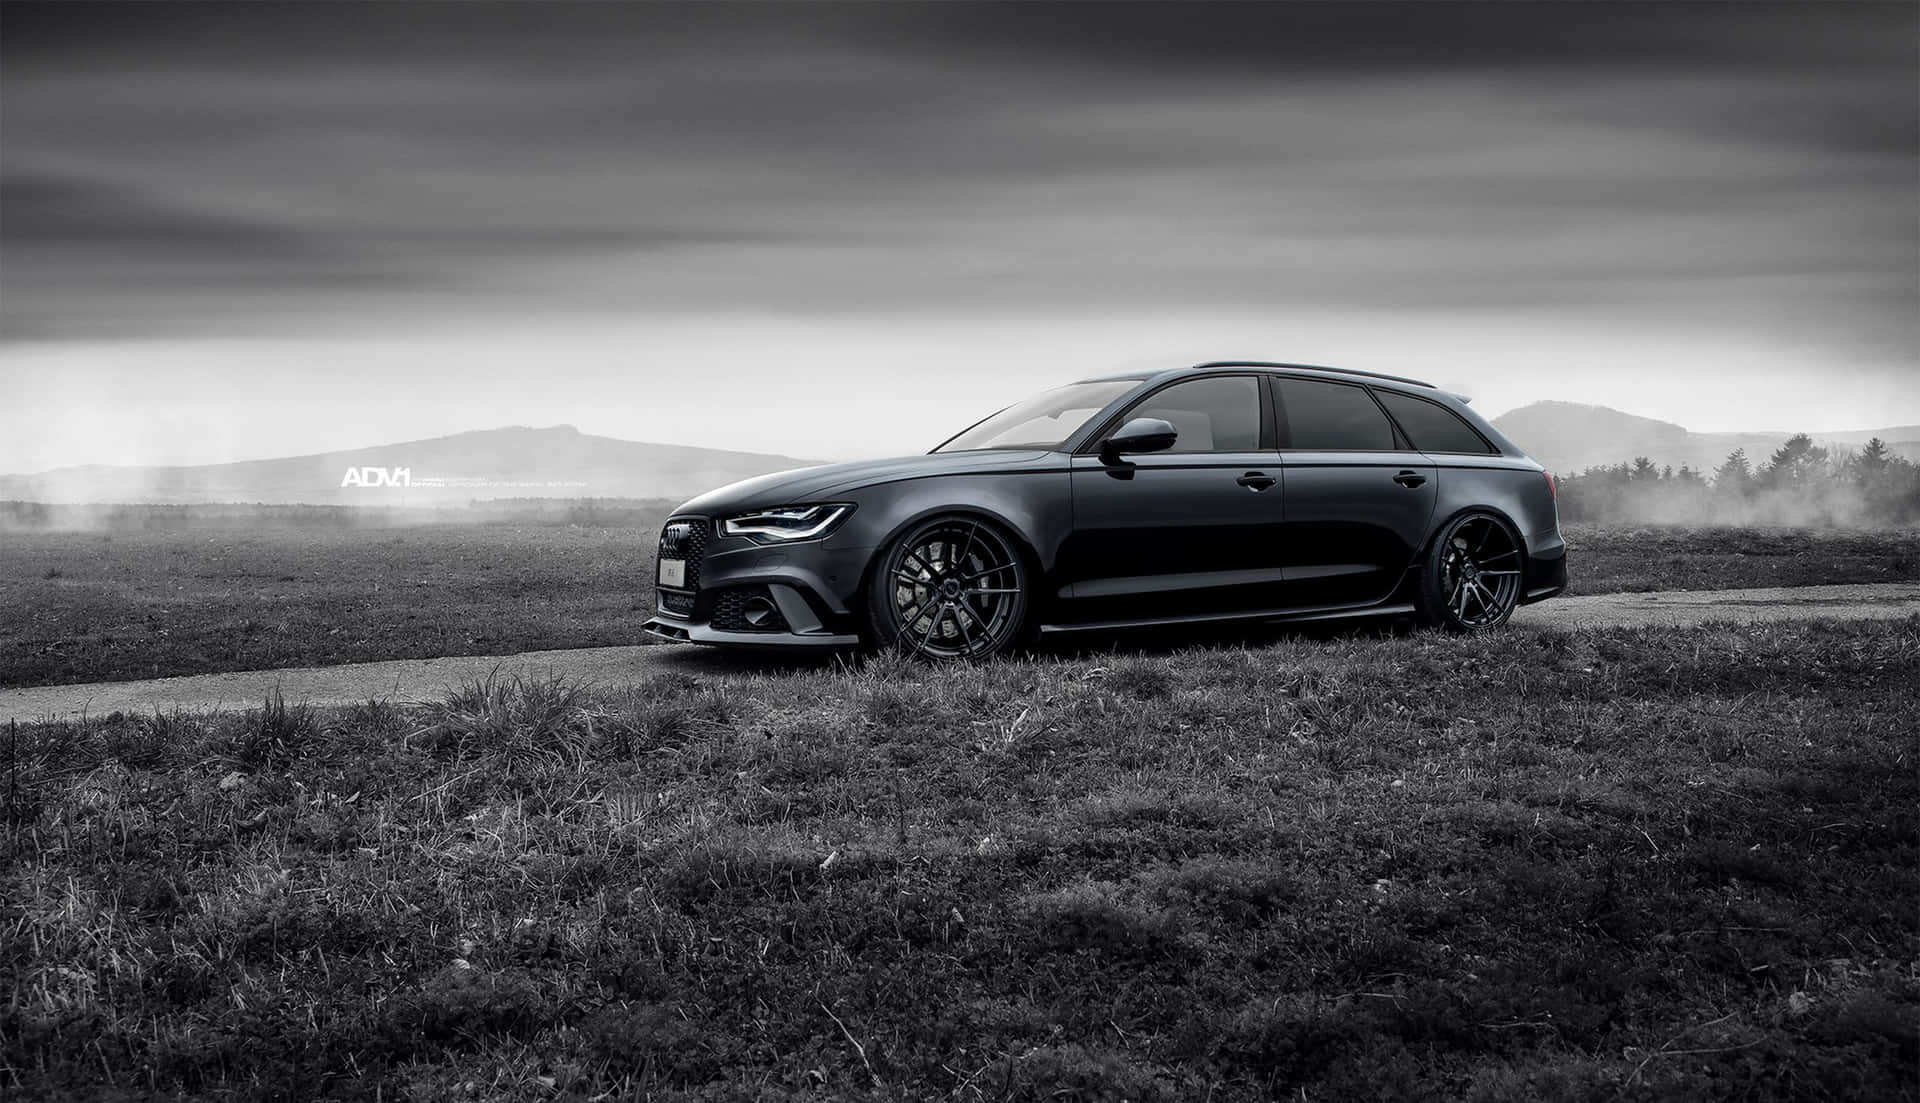 Caption: Sleek Audi RS6 Showcasing Its Impressive Power and Design Wallpaper